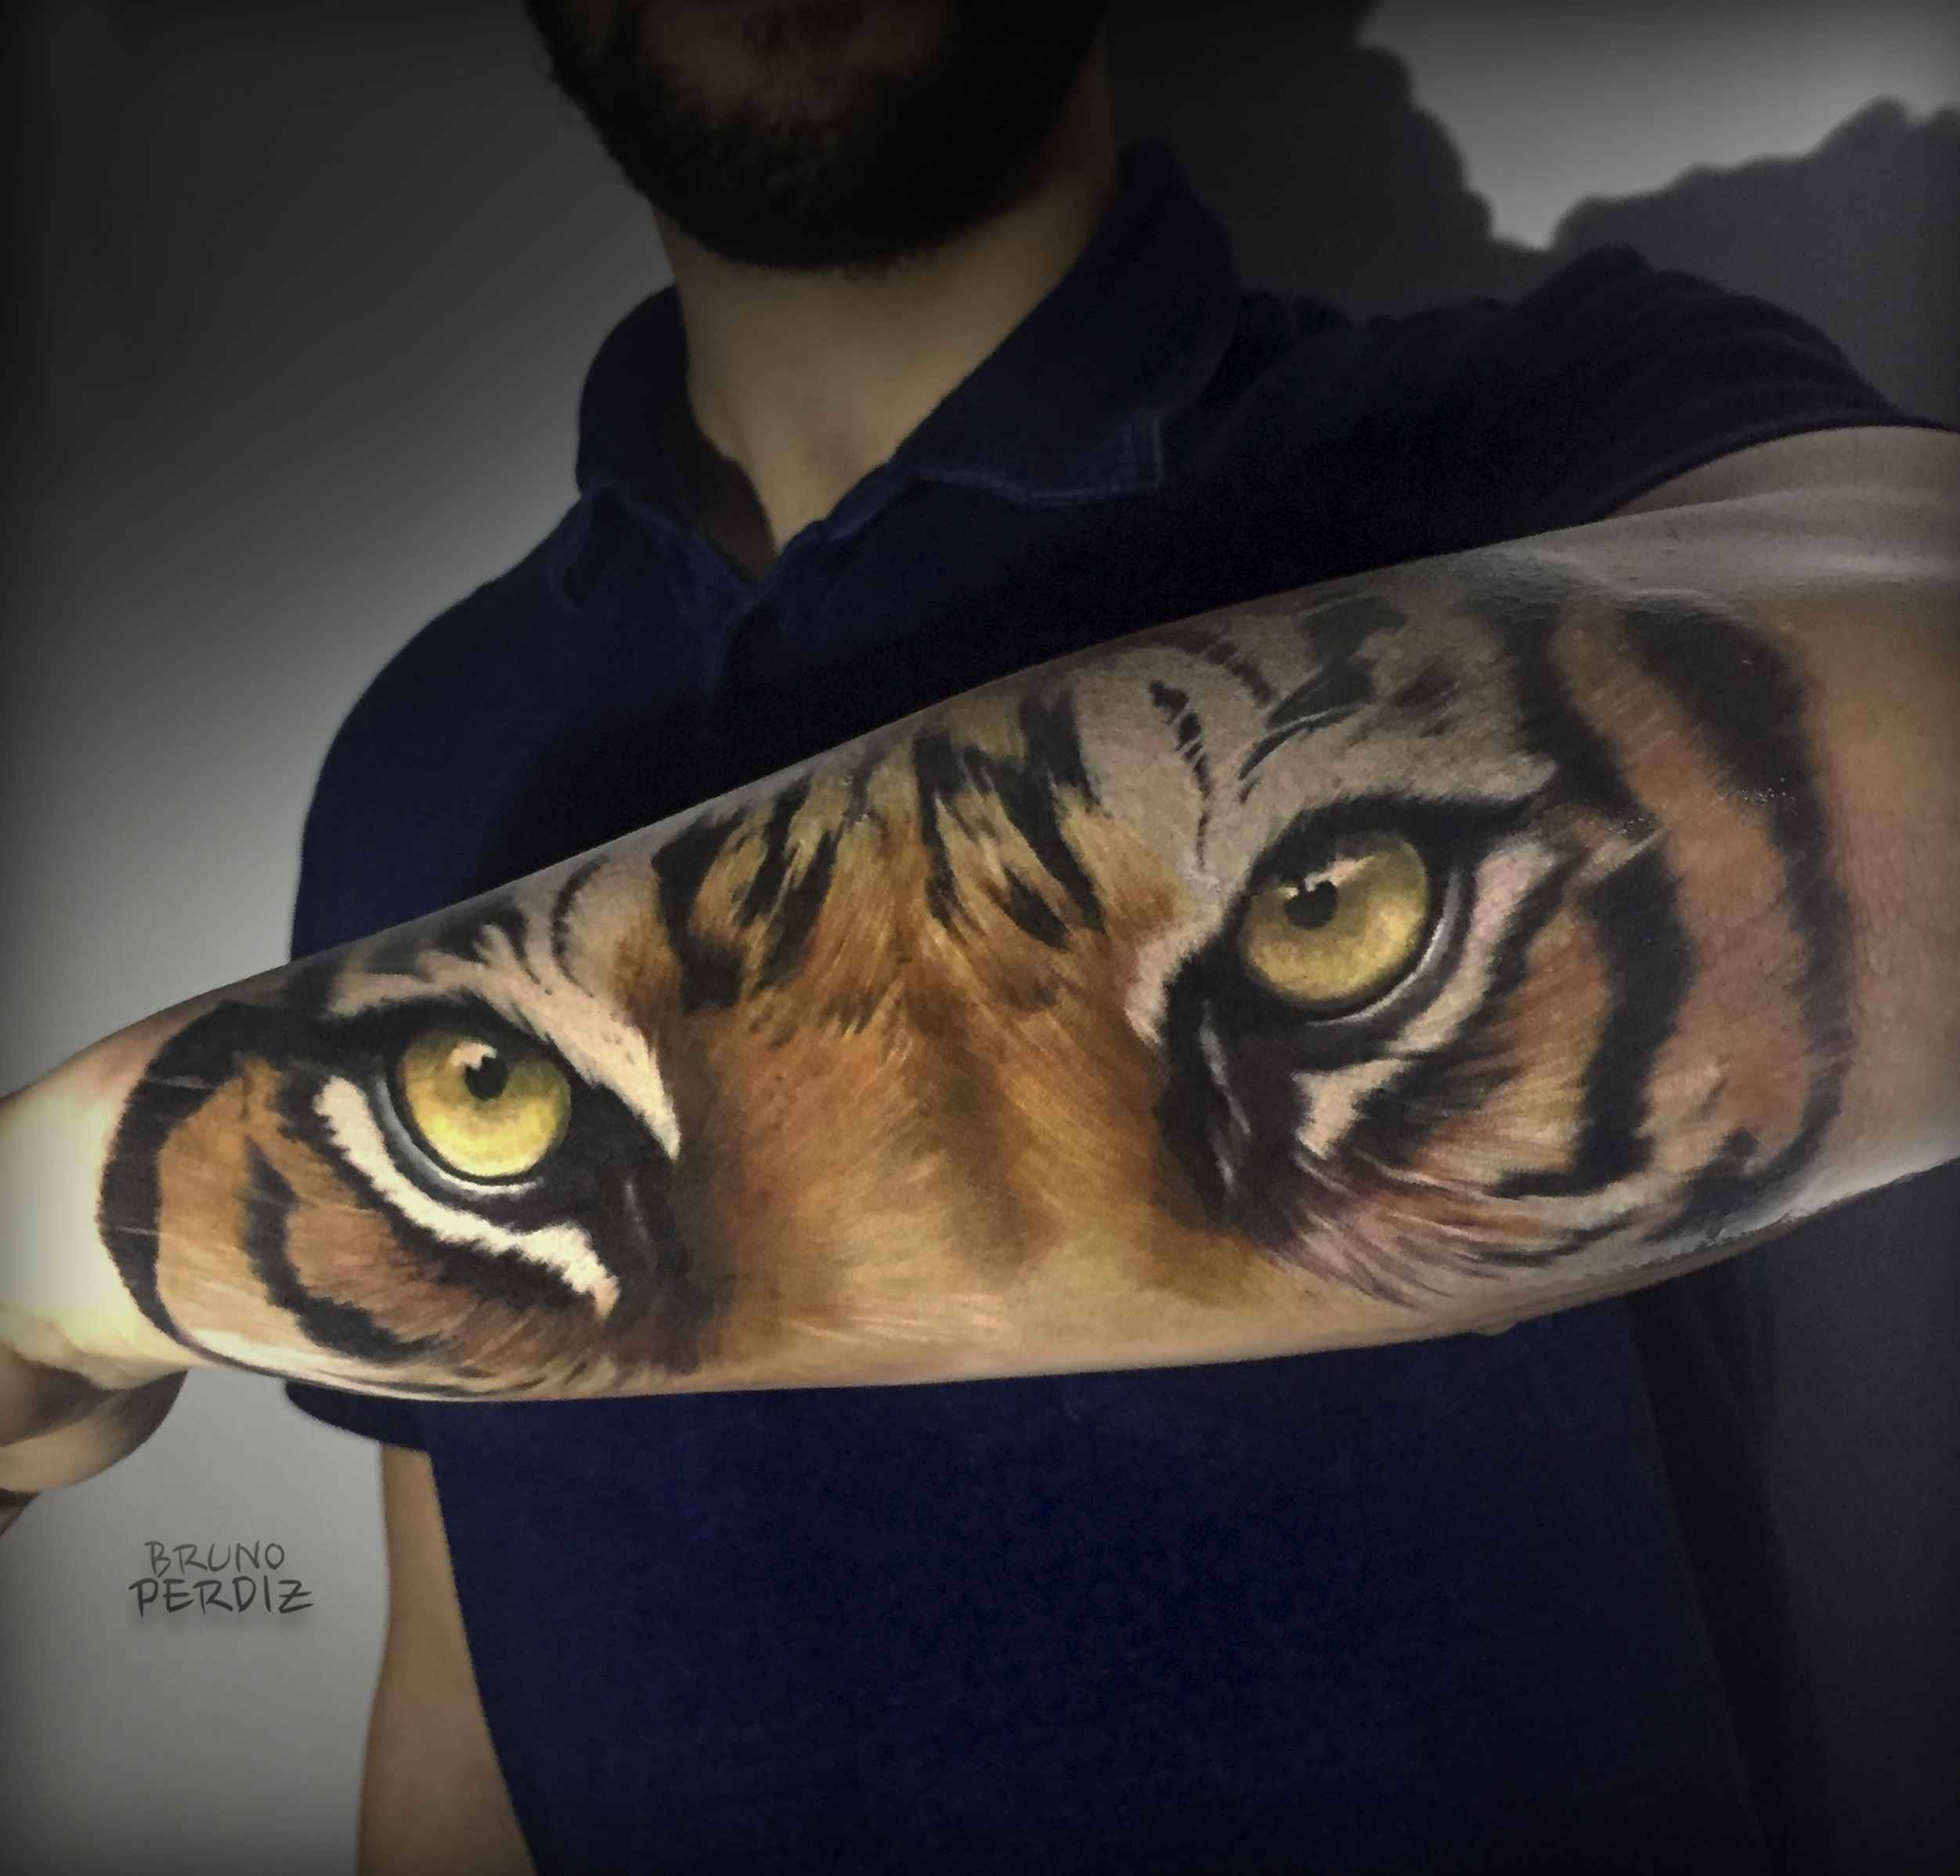 Tattoo artist Bruno Perdiz | Aveiro, Portugal | iNKPPL